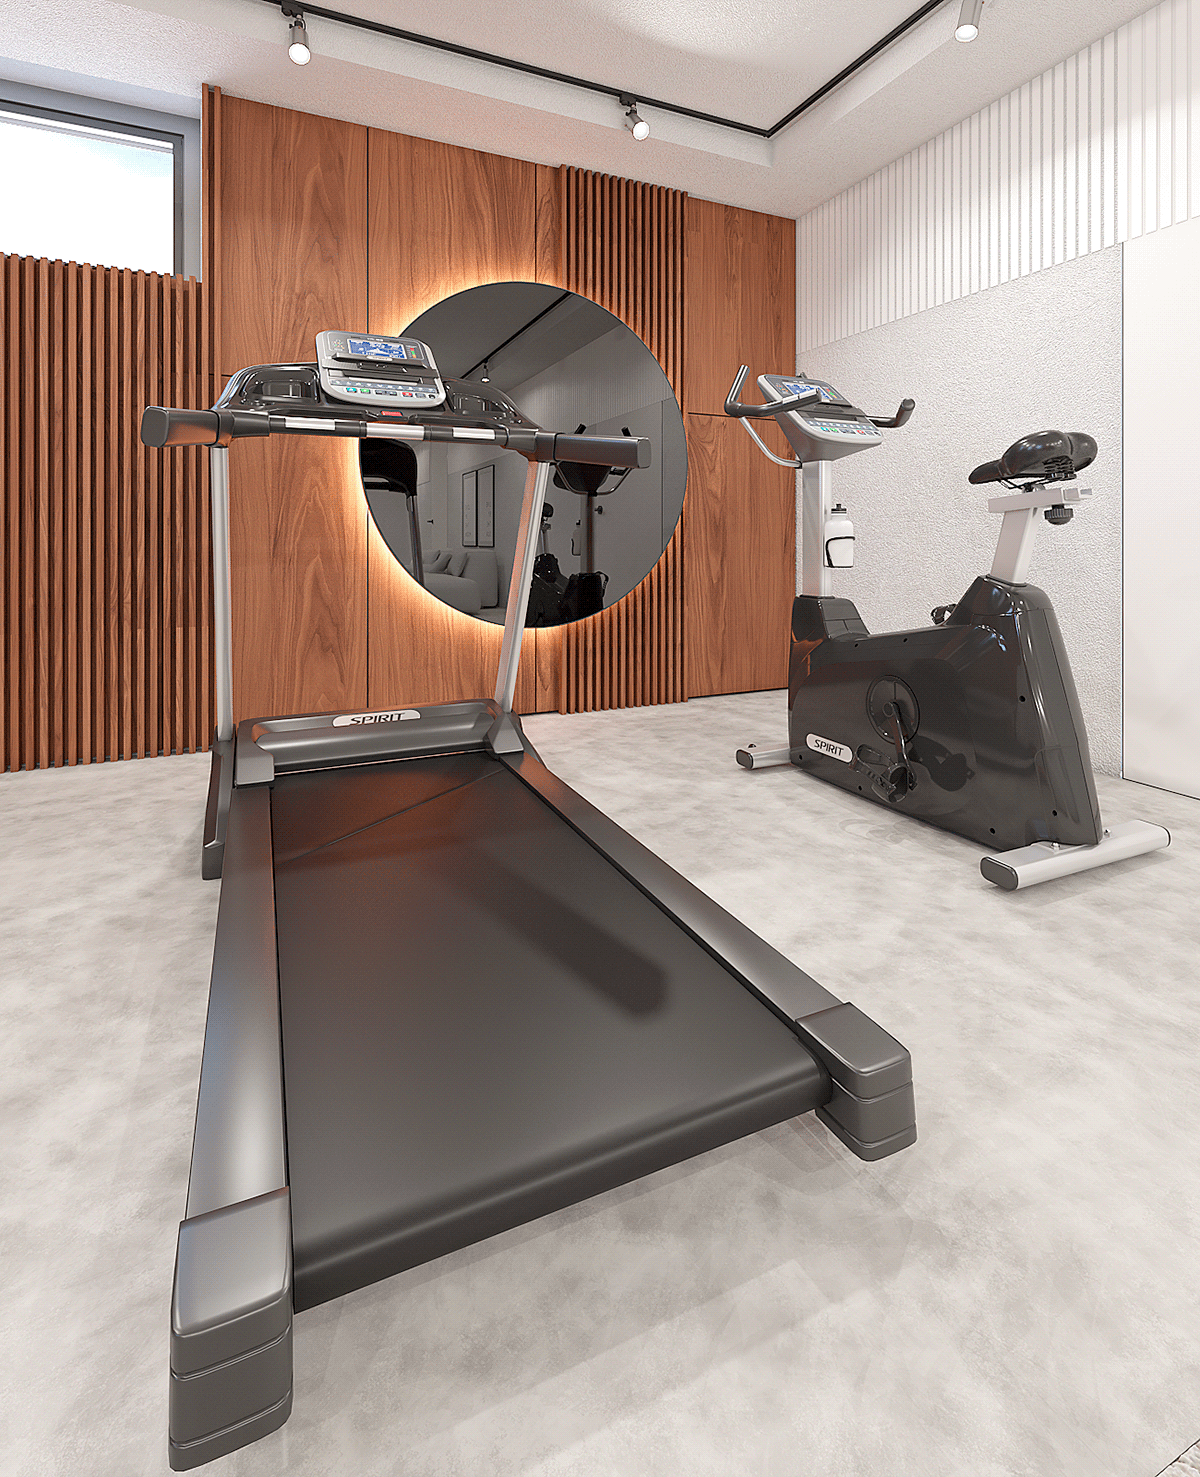 3D 3ds max 3dsmax Interior interior design  Render visualization Визуализация интерьера интерьер спортзал